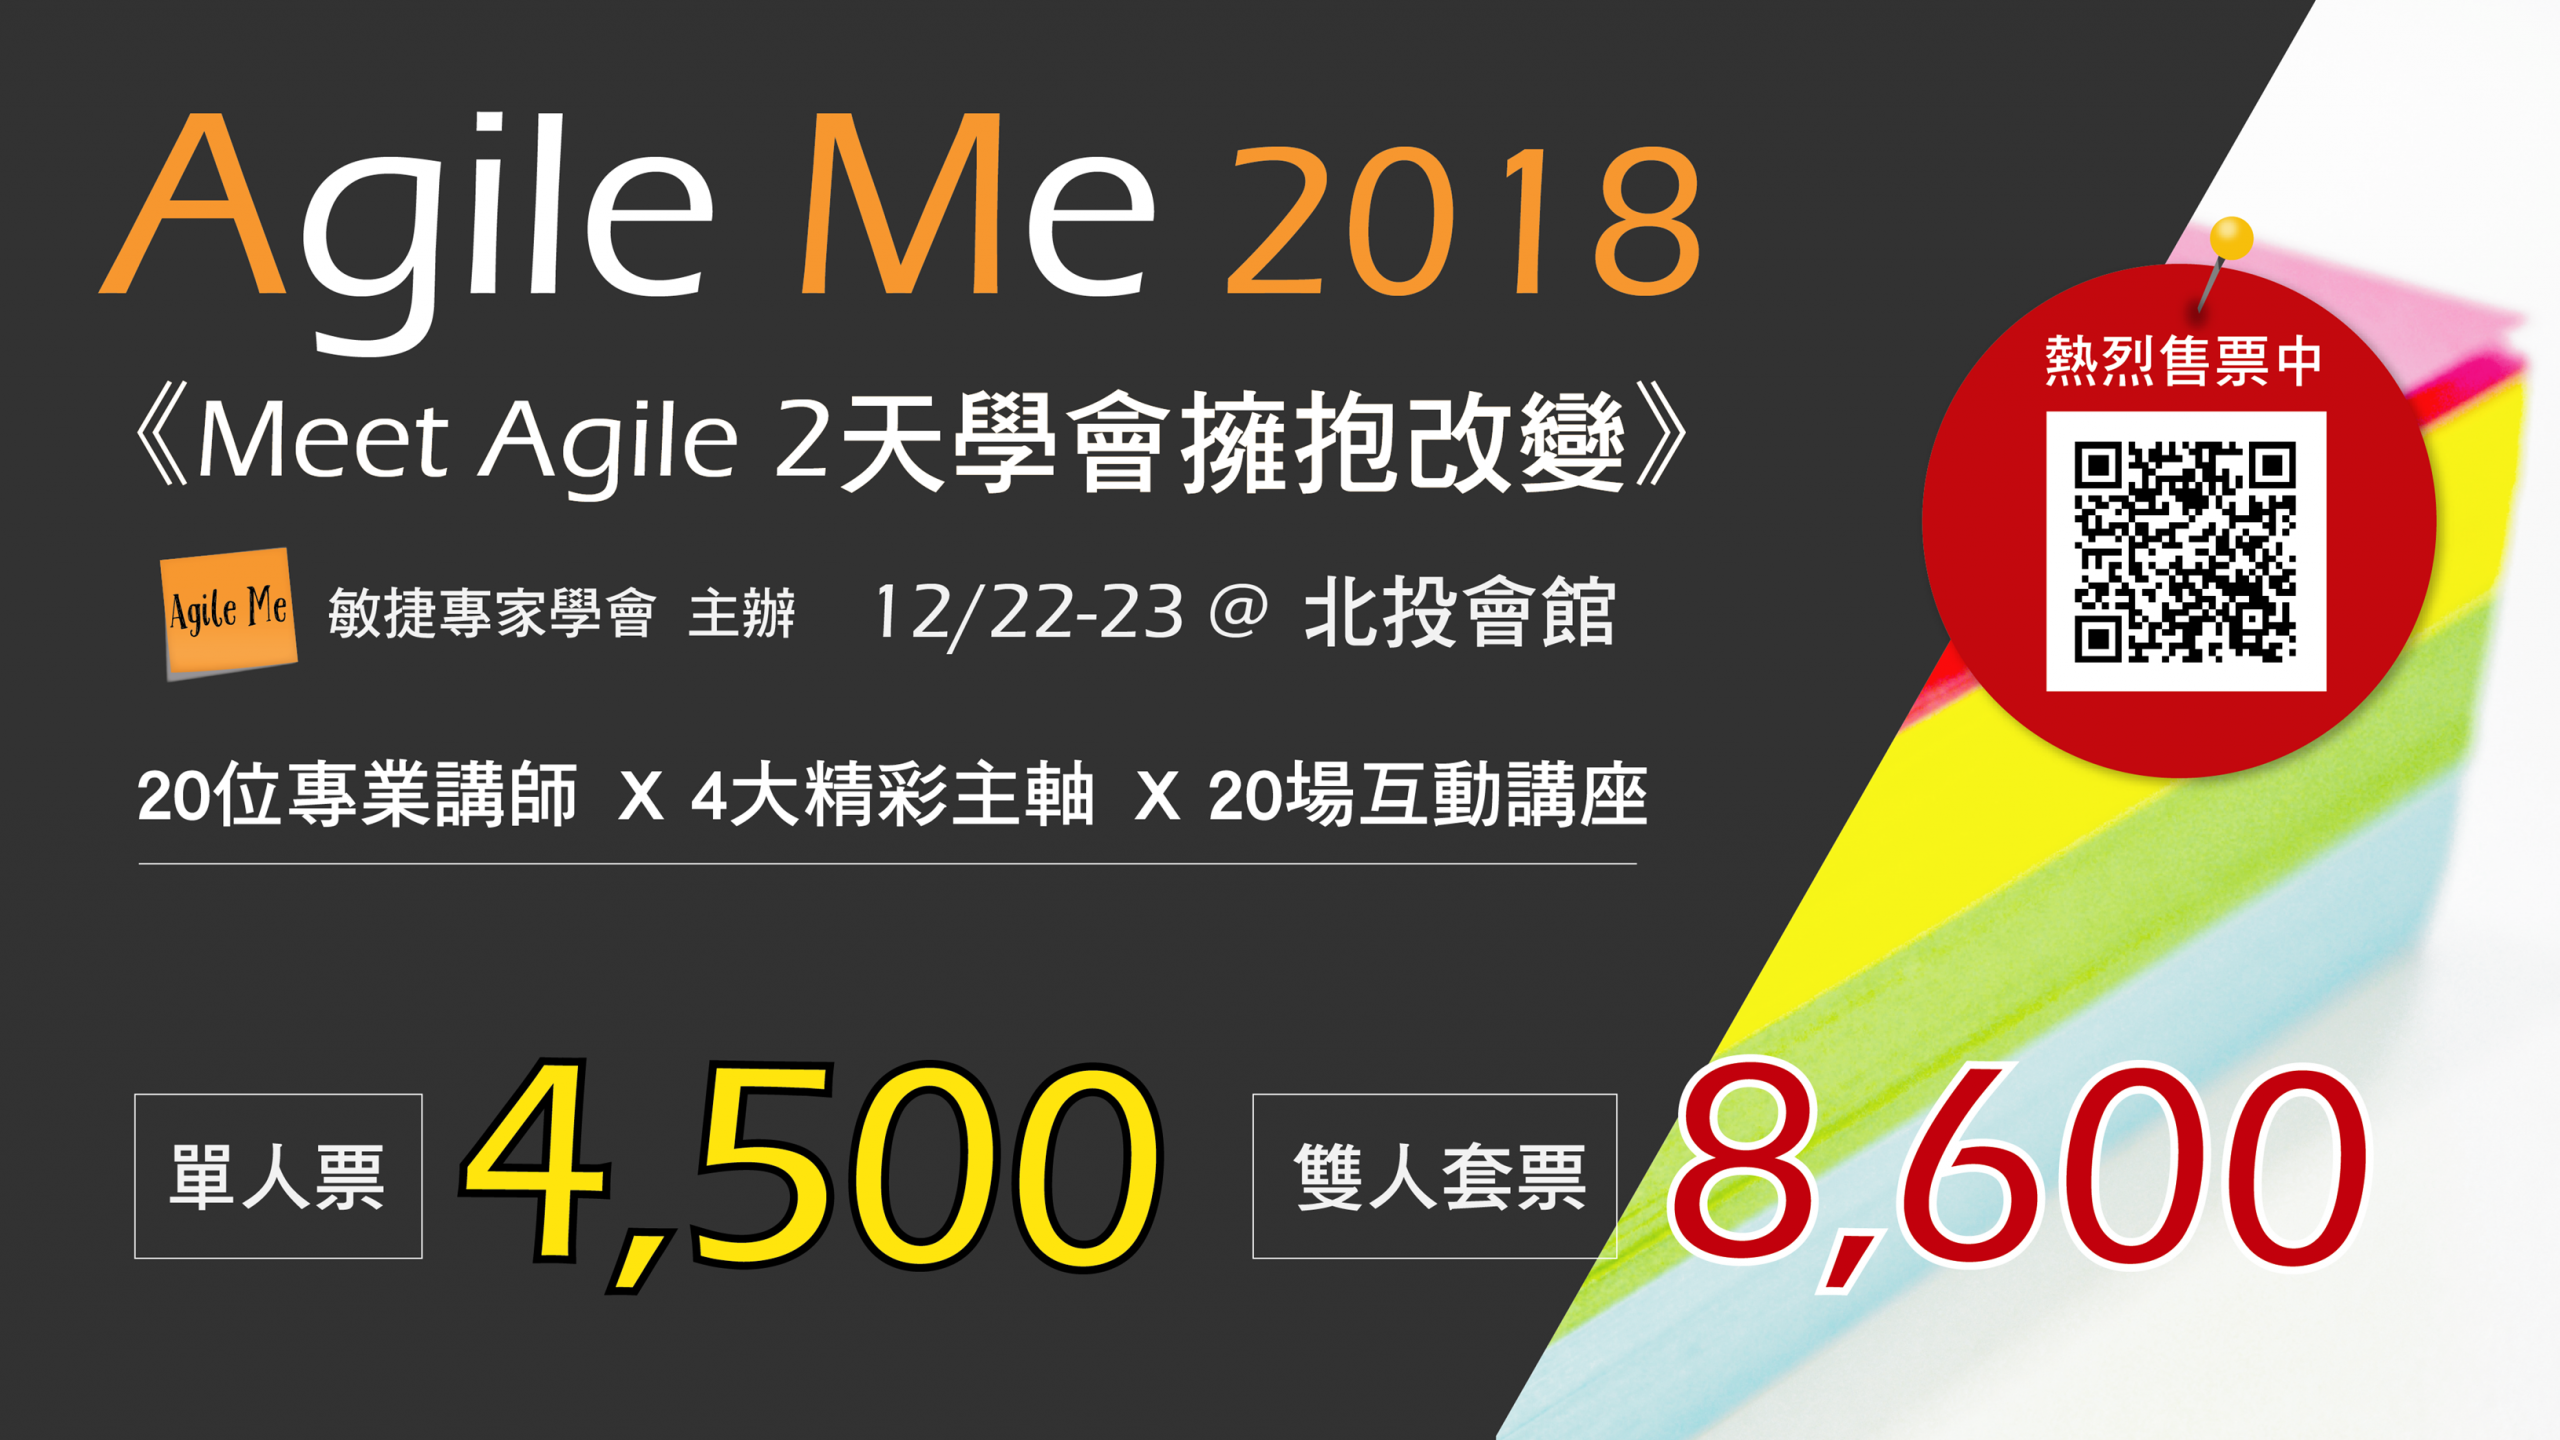 【Agile Me 2018 】全課程公布